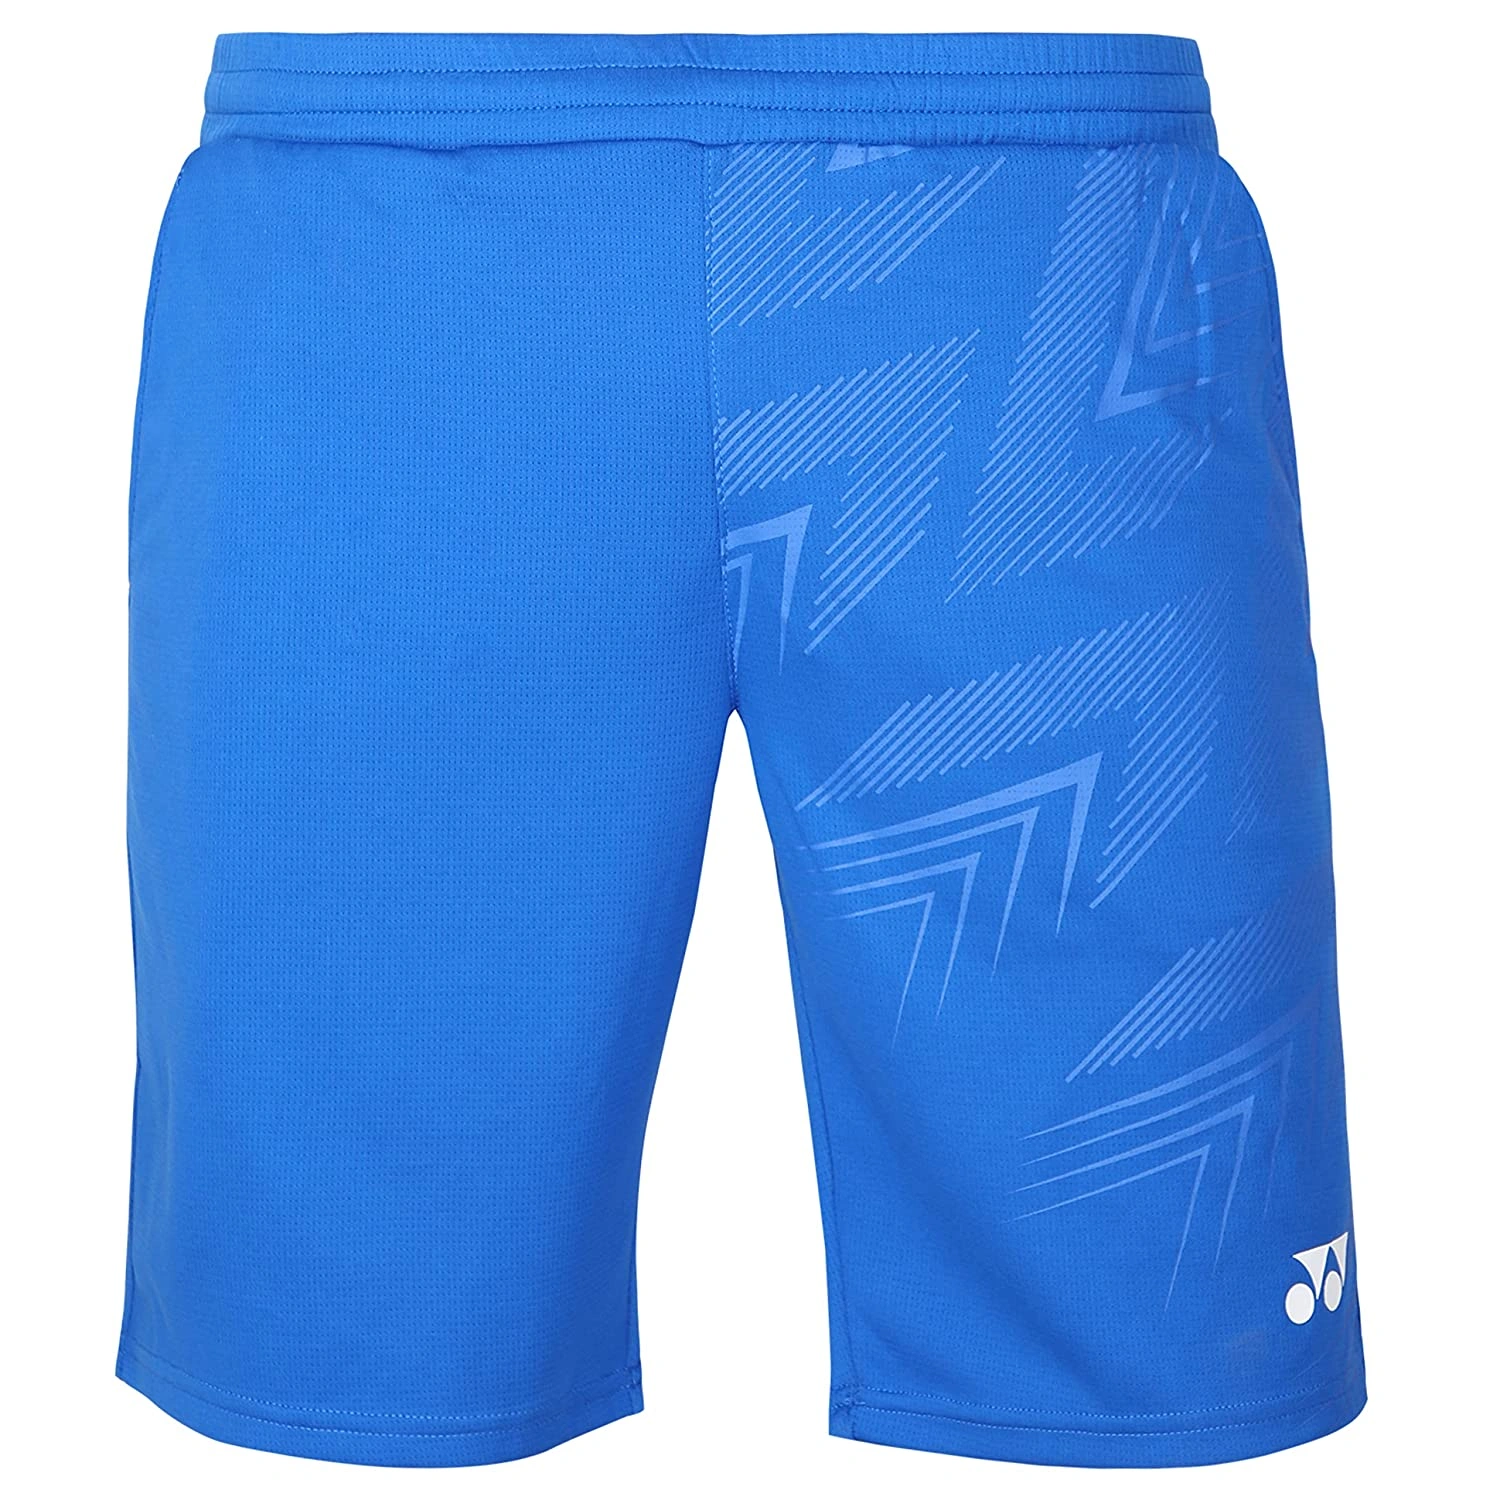 YONEX 2061 Senior Badminton/Tennis Shorts-NAUTICAL BLUE-L-1